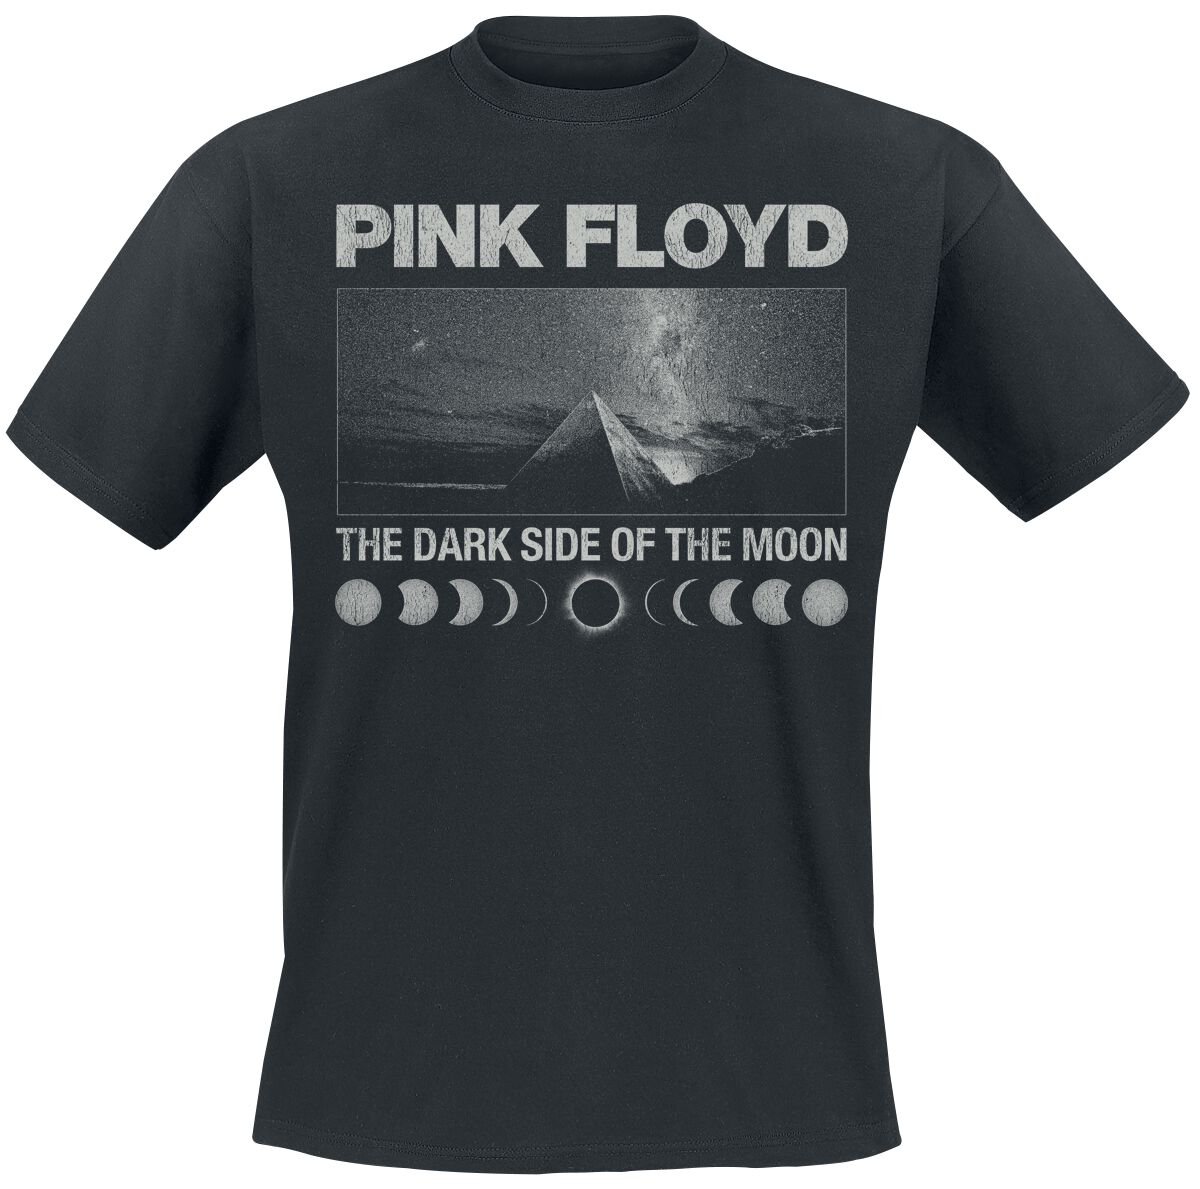 Pink Floyd Vintage Poster T-Shirt schwarz in S